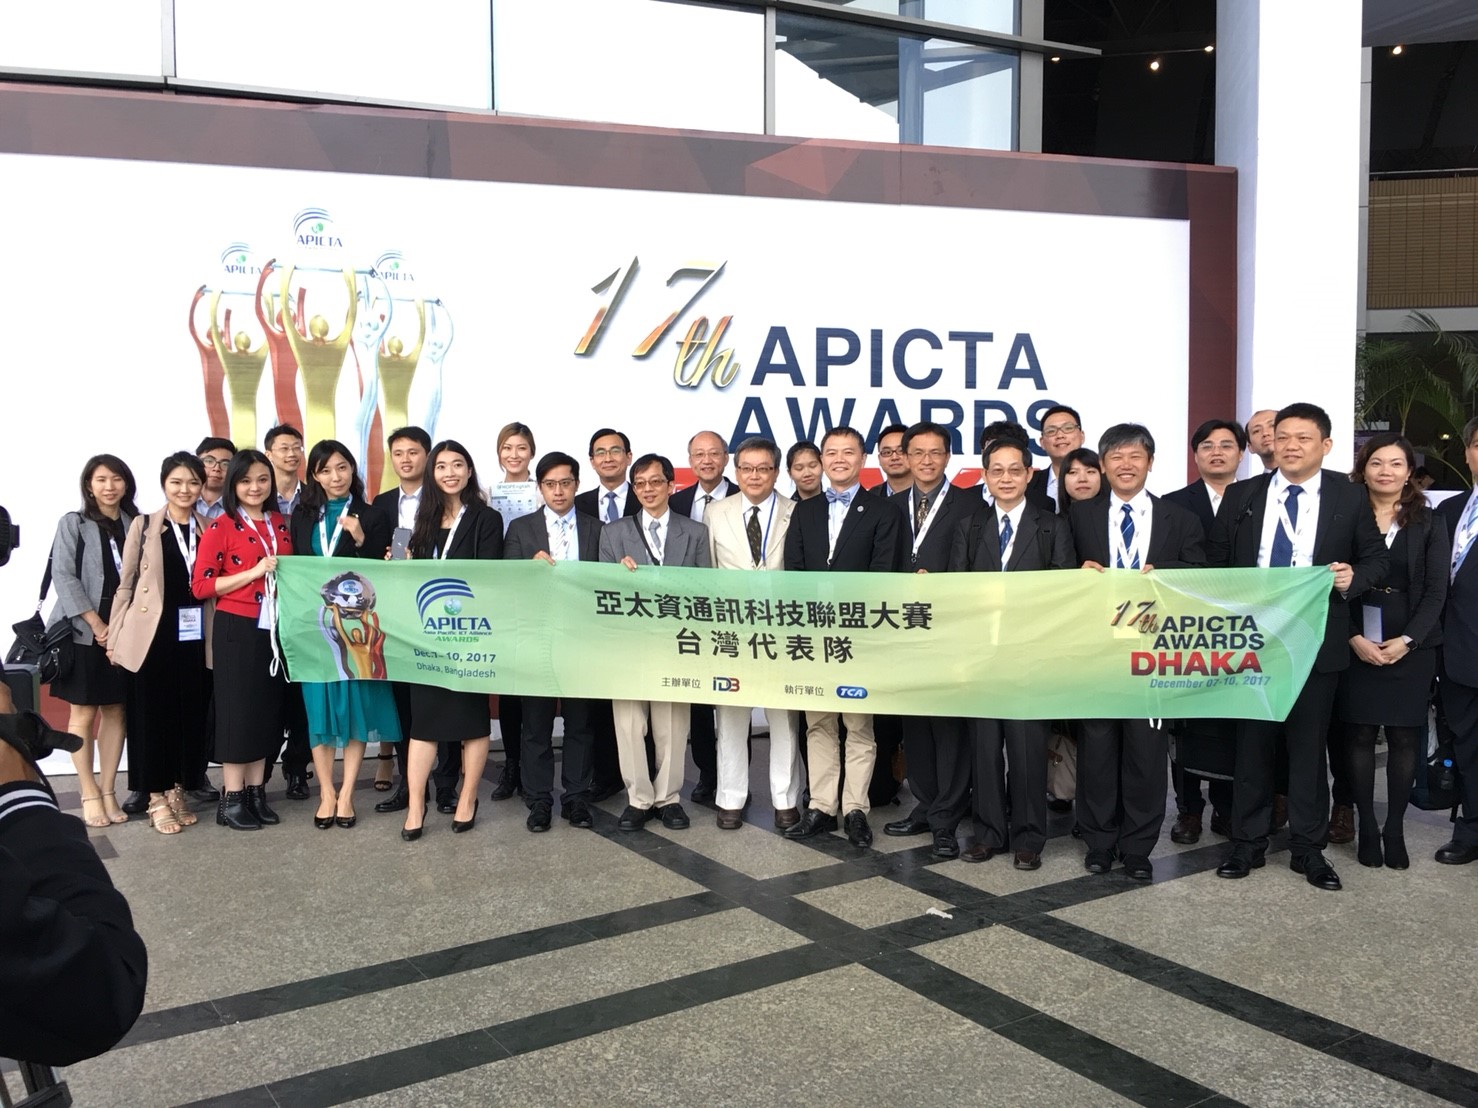 APICTA Awards@ Dhaka